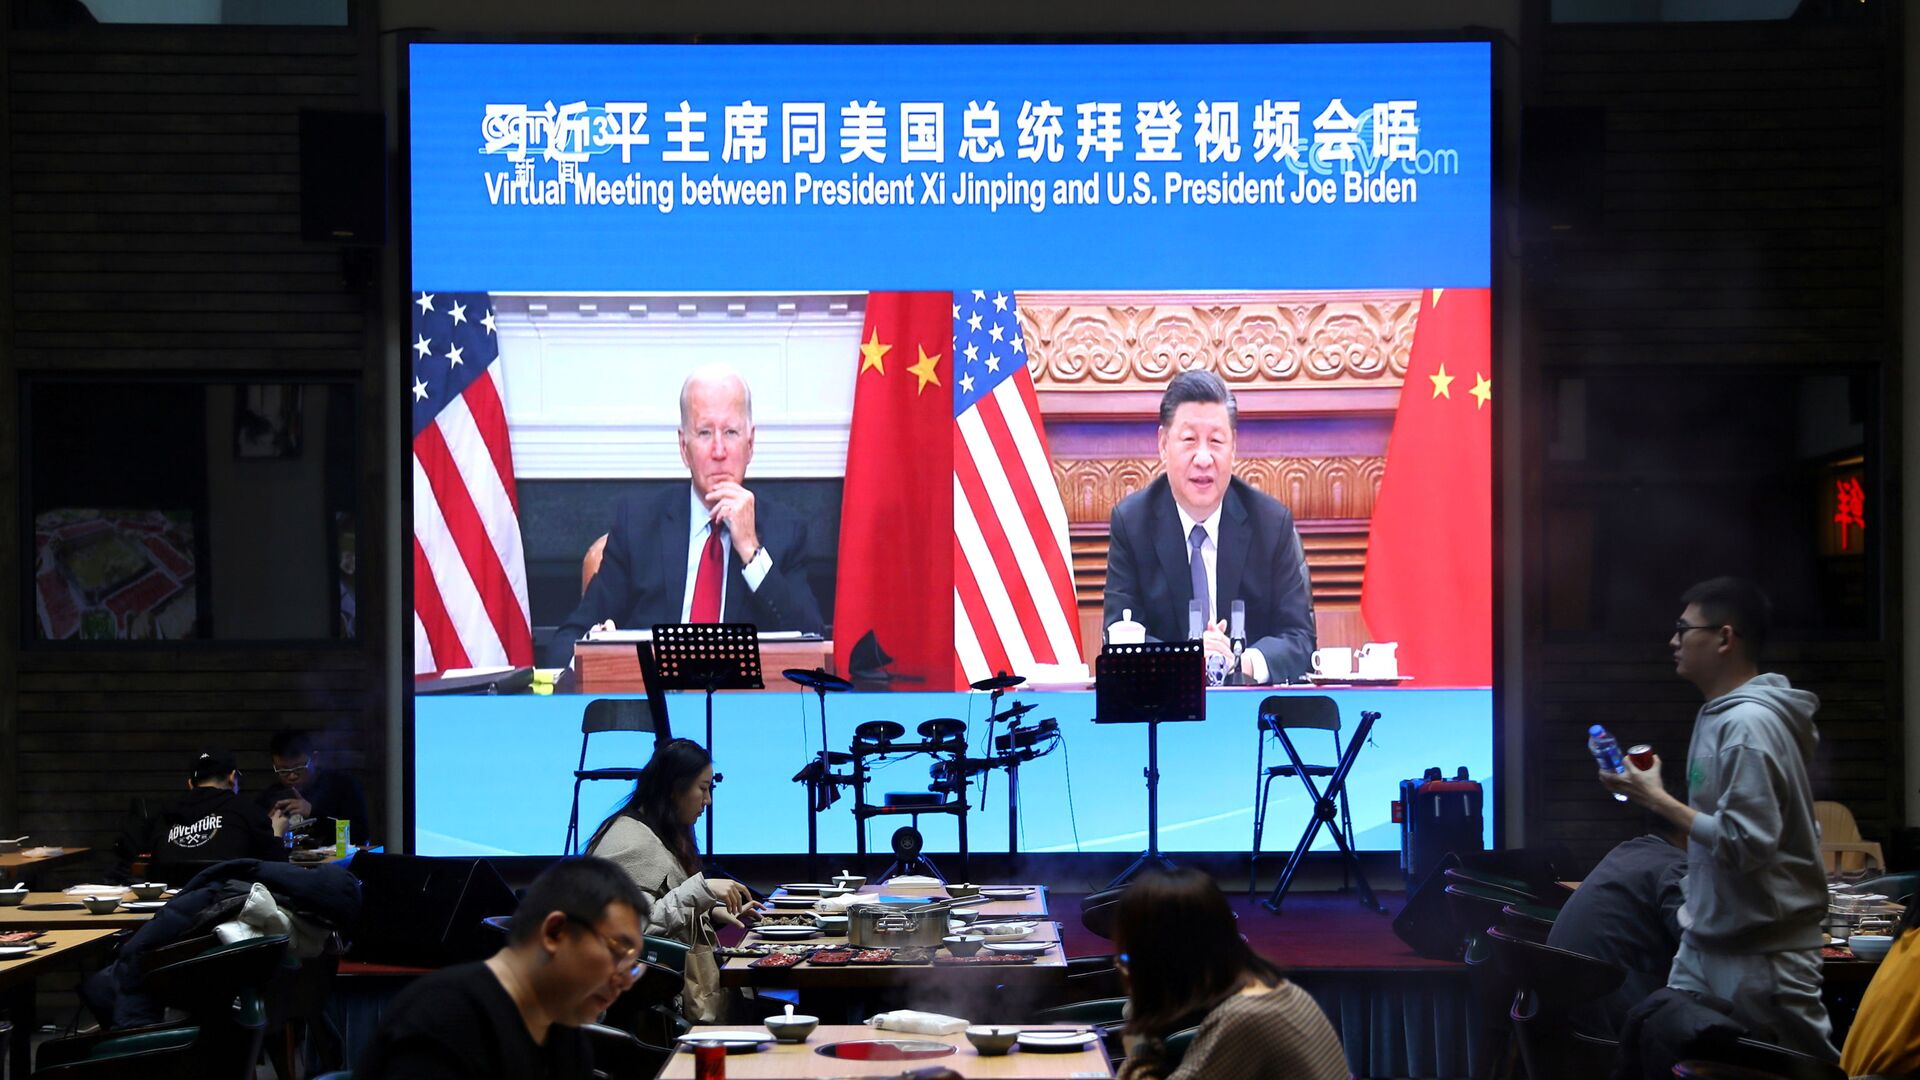 Трансляция виртуальной встречи президента США Джо Байдена с президентом Китая Си Цзиньпином в ресторане в Пекине, Китай - Sputnik Узбекистан, 1920, 23.02.2022